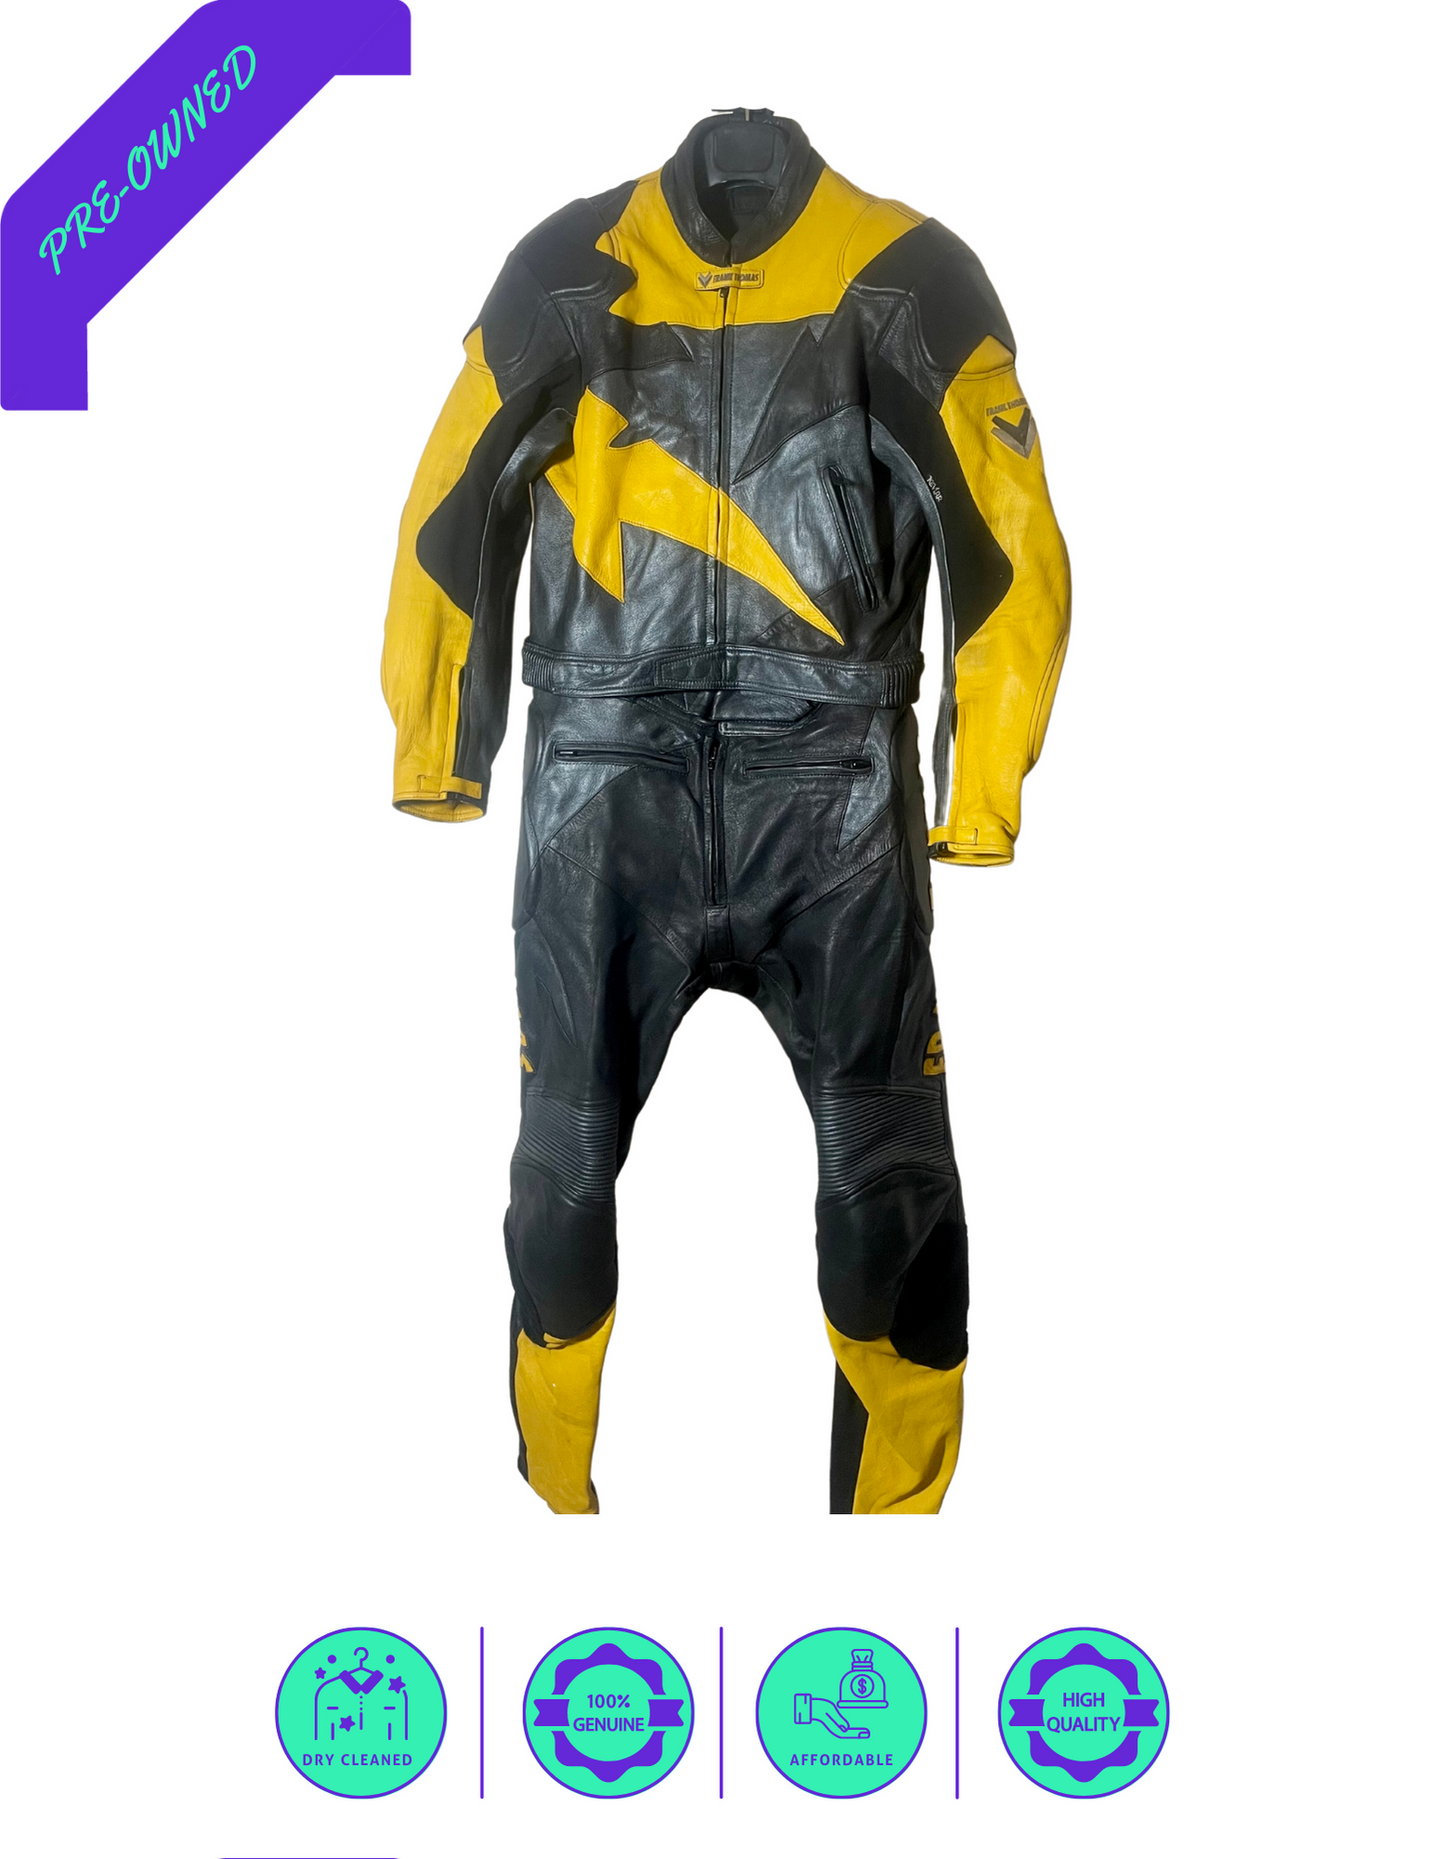 Frank Thomas I Men Racing Suit I 2-piece I Yellow/Black